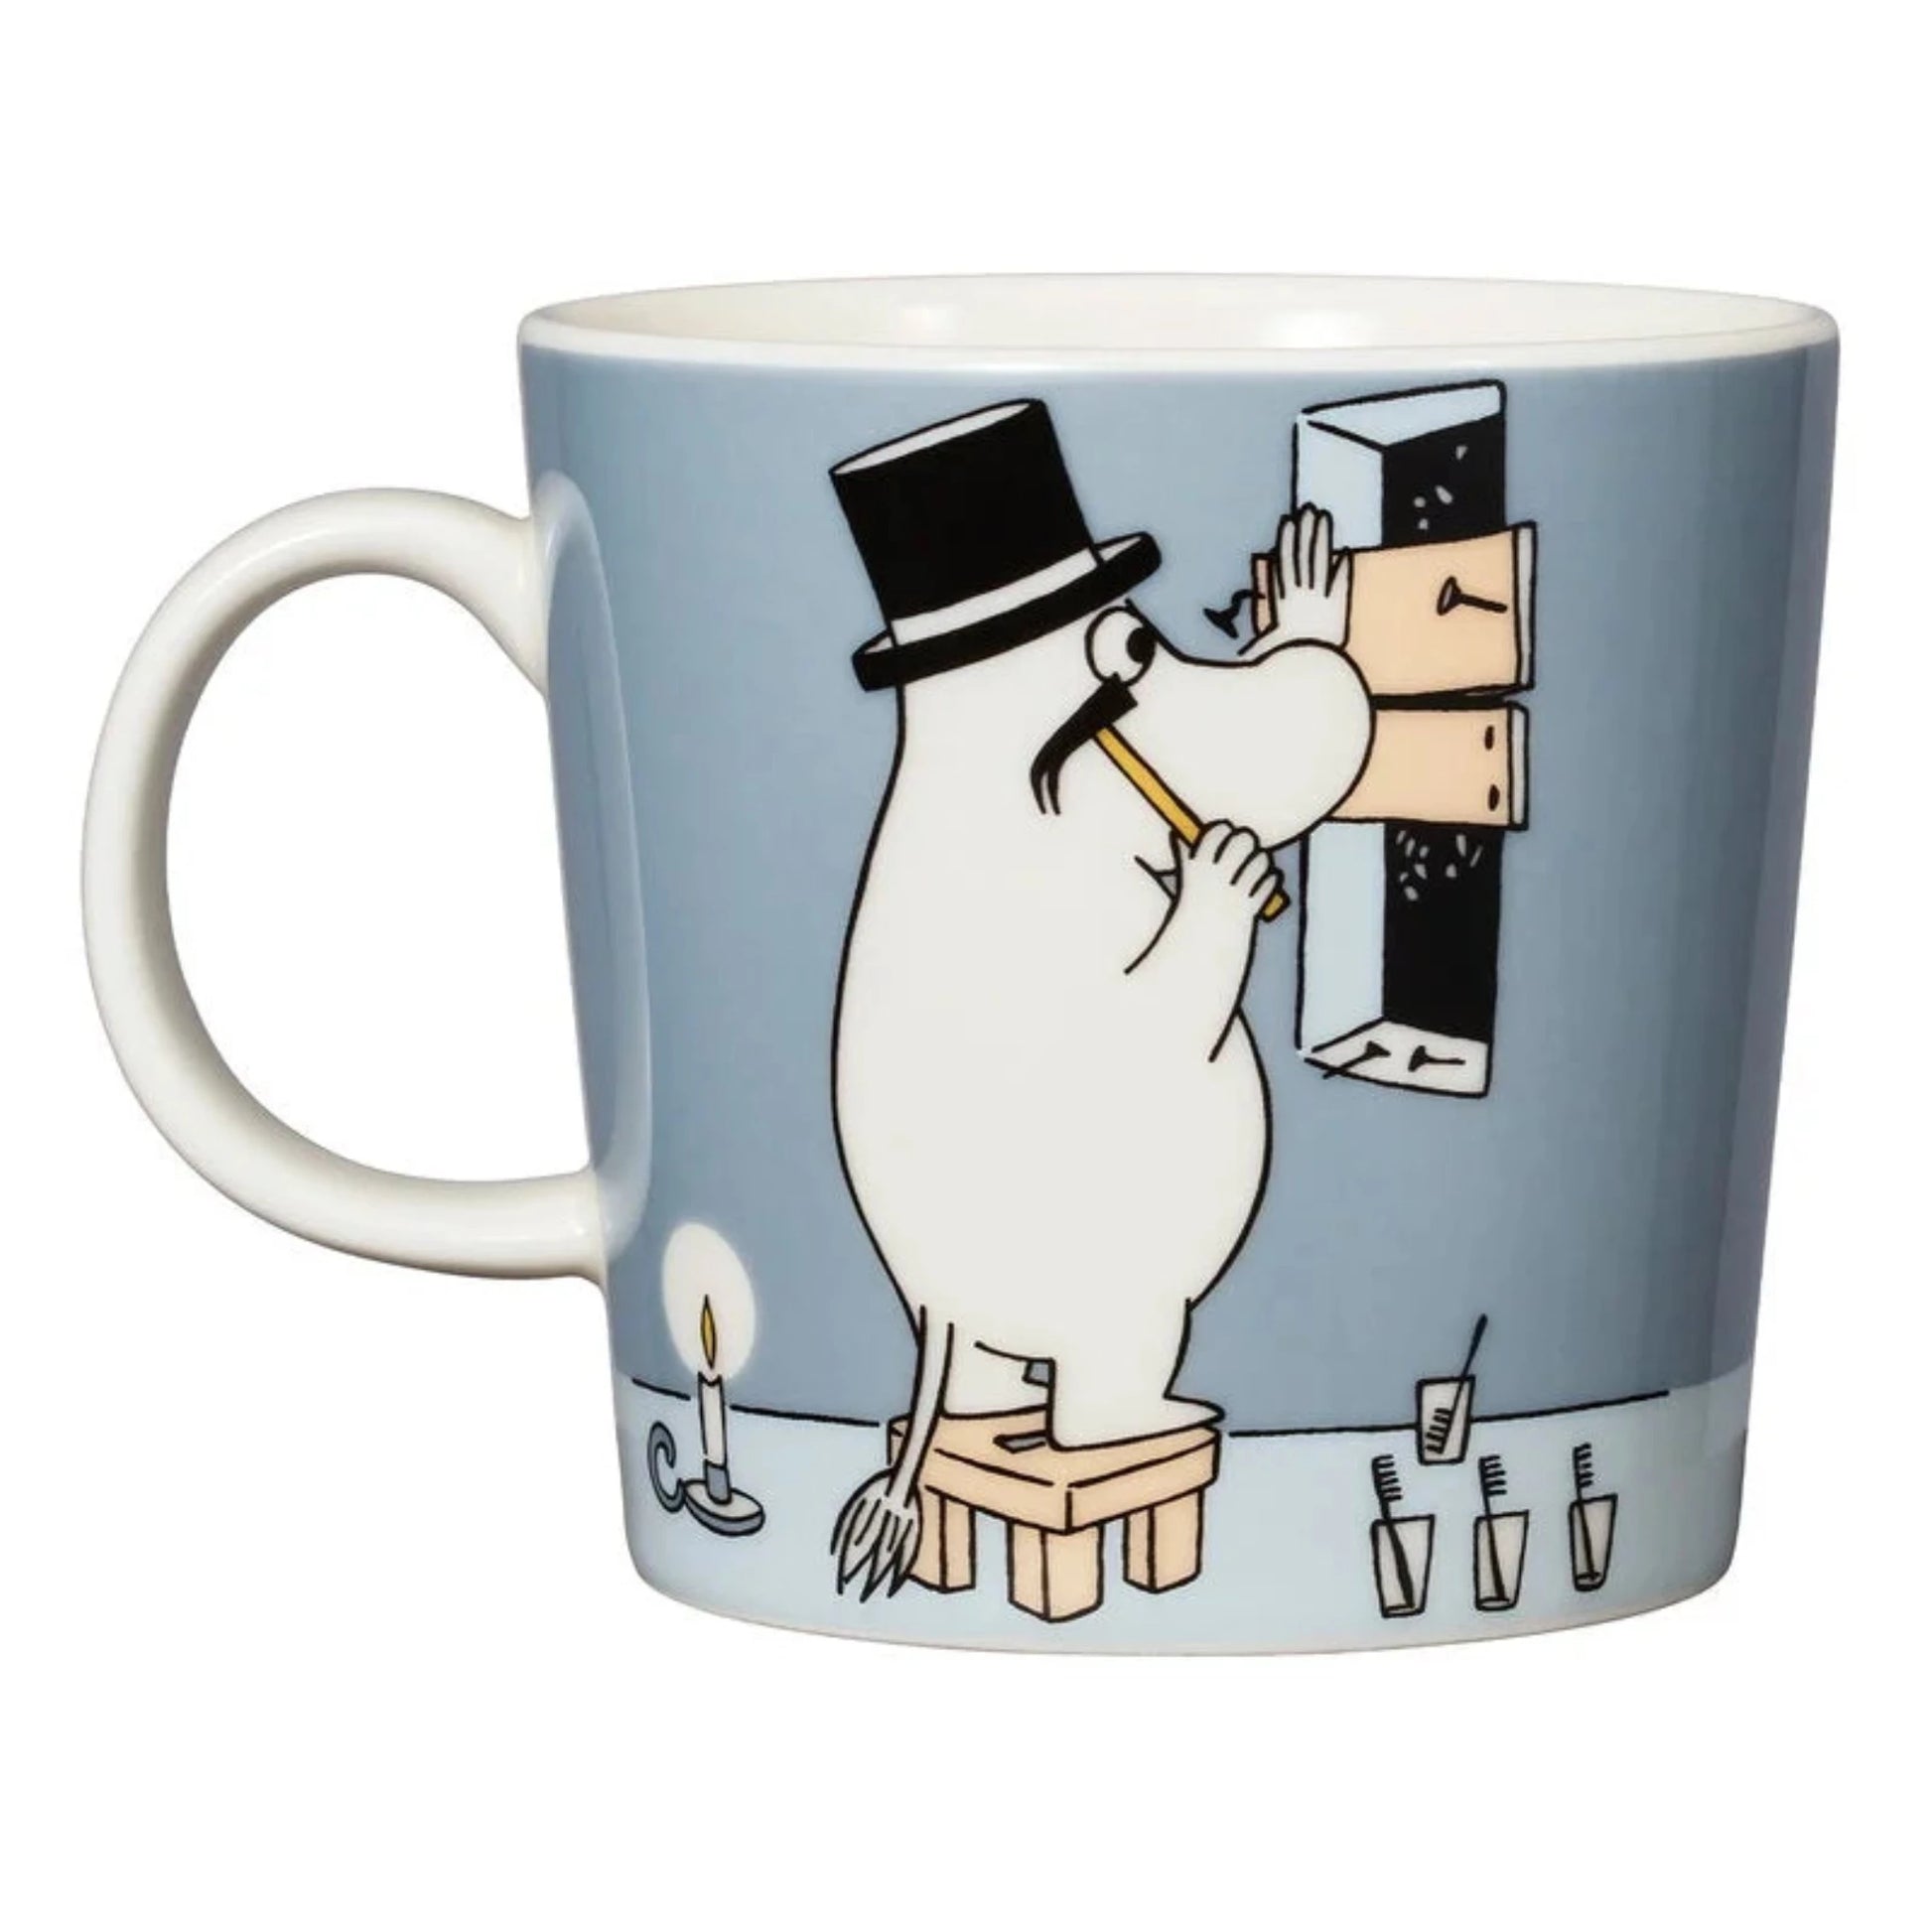 Moomin Mug by Arabia, Moominpappa Preparing (8766141792543)